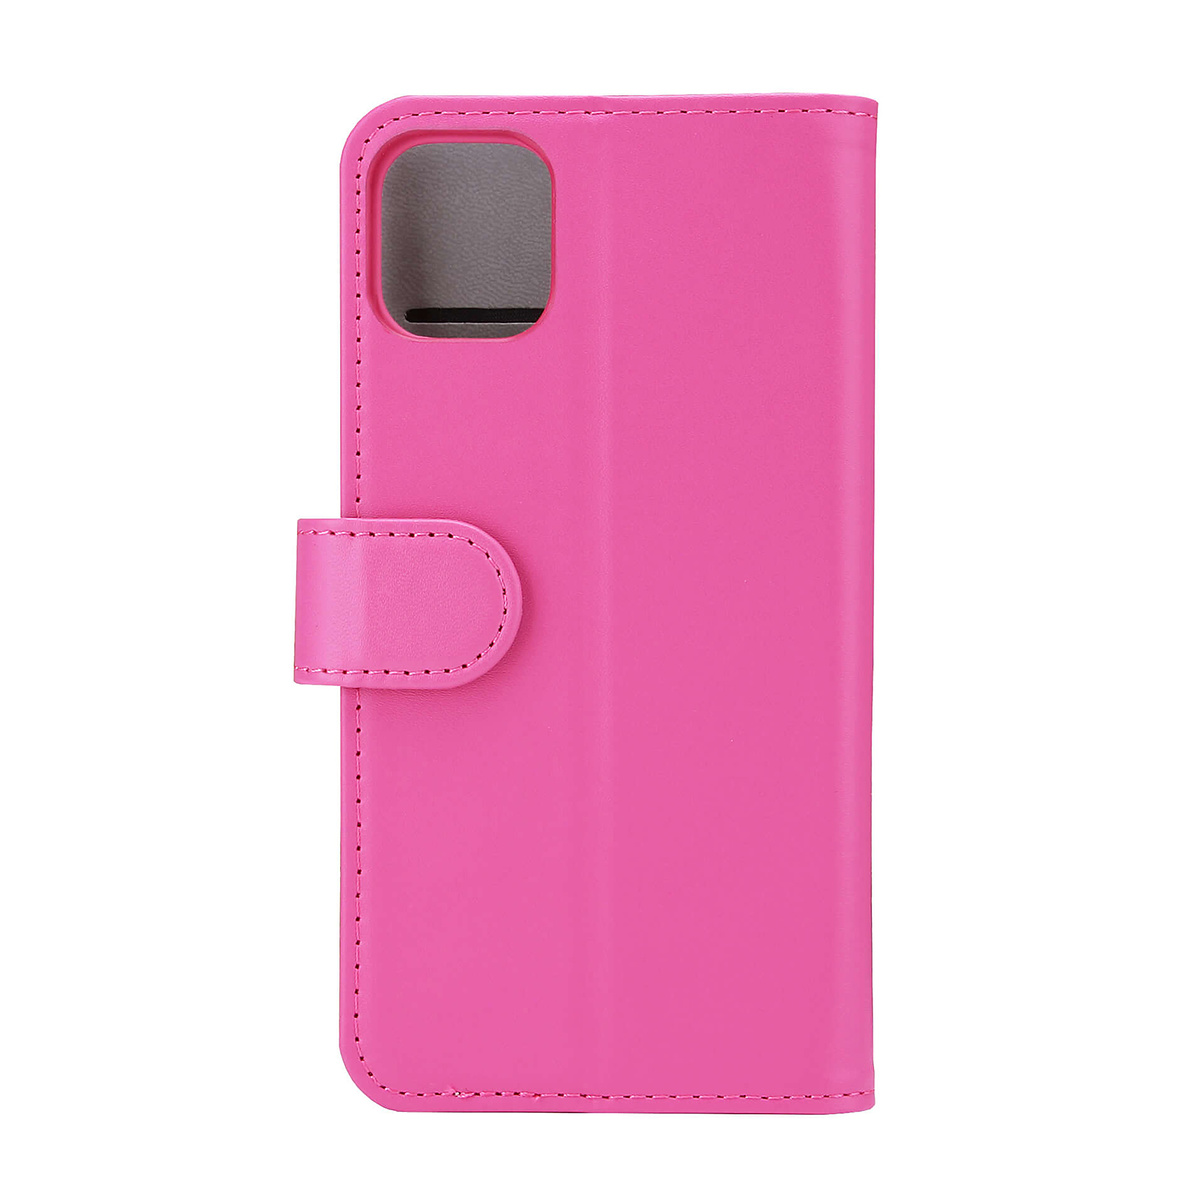 Gear plånboksväska, iPhone 11, rosa